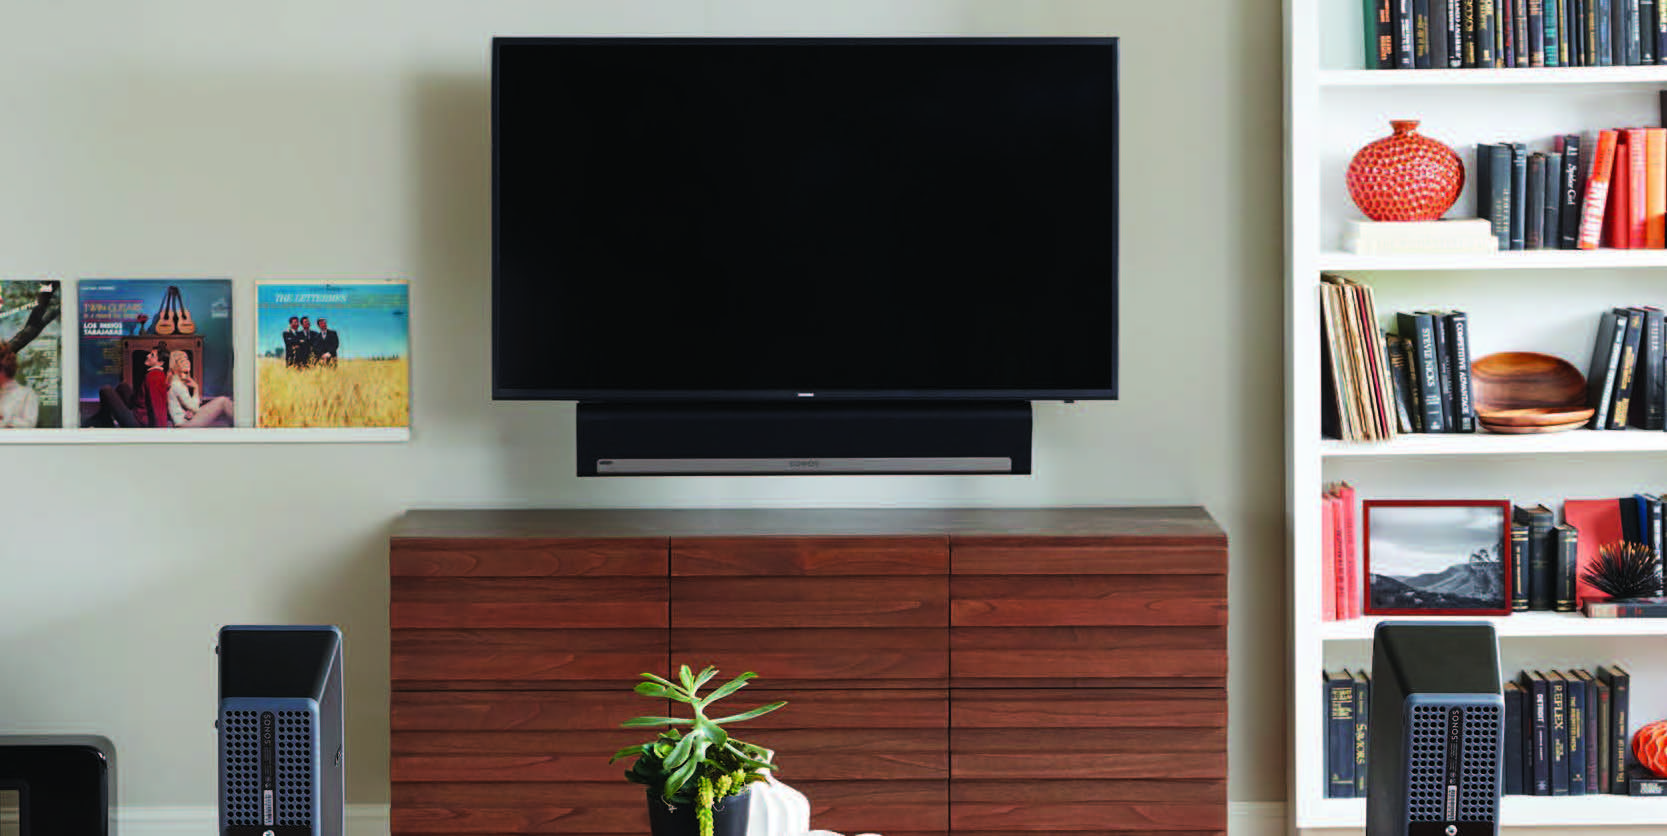 Black SA405 Soundbar Mount displayed in a lifestyle image of living room